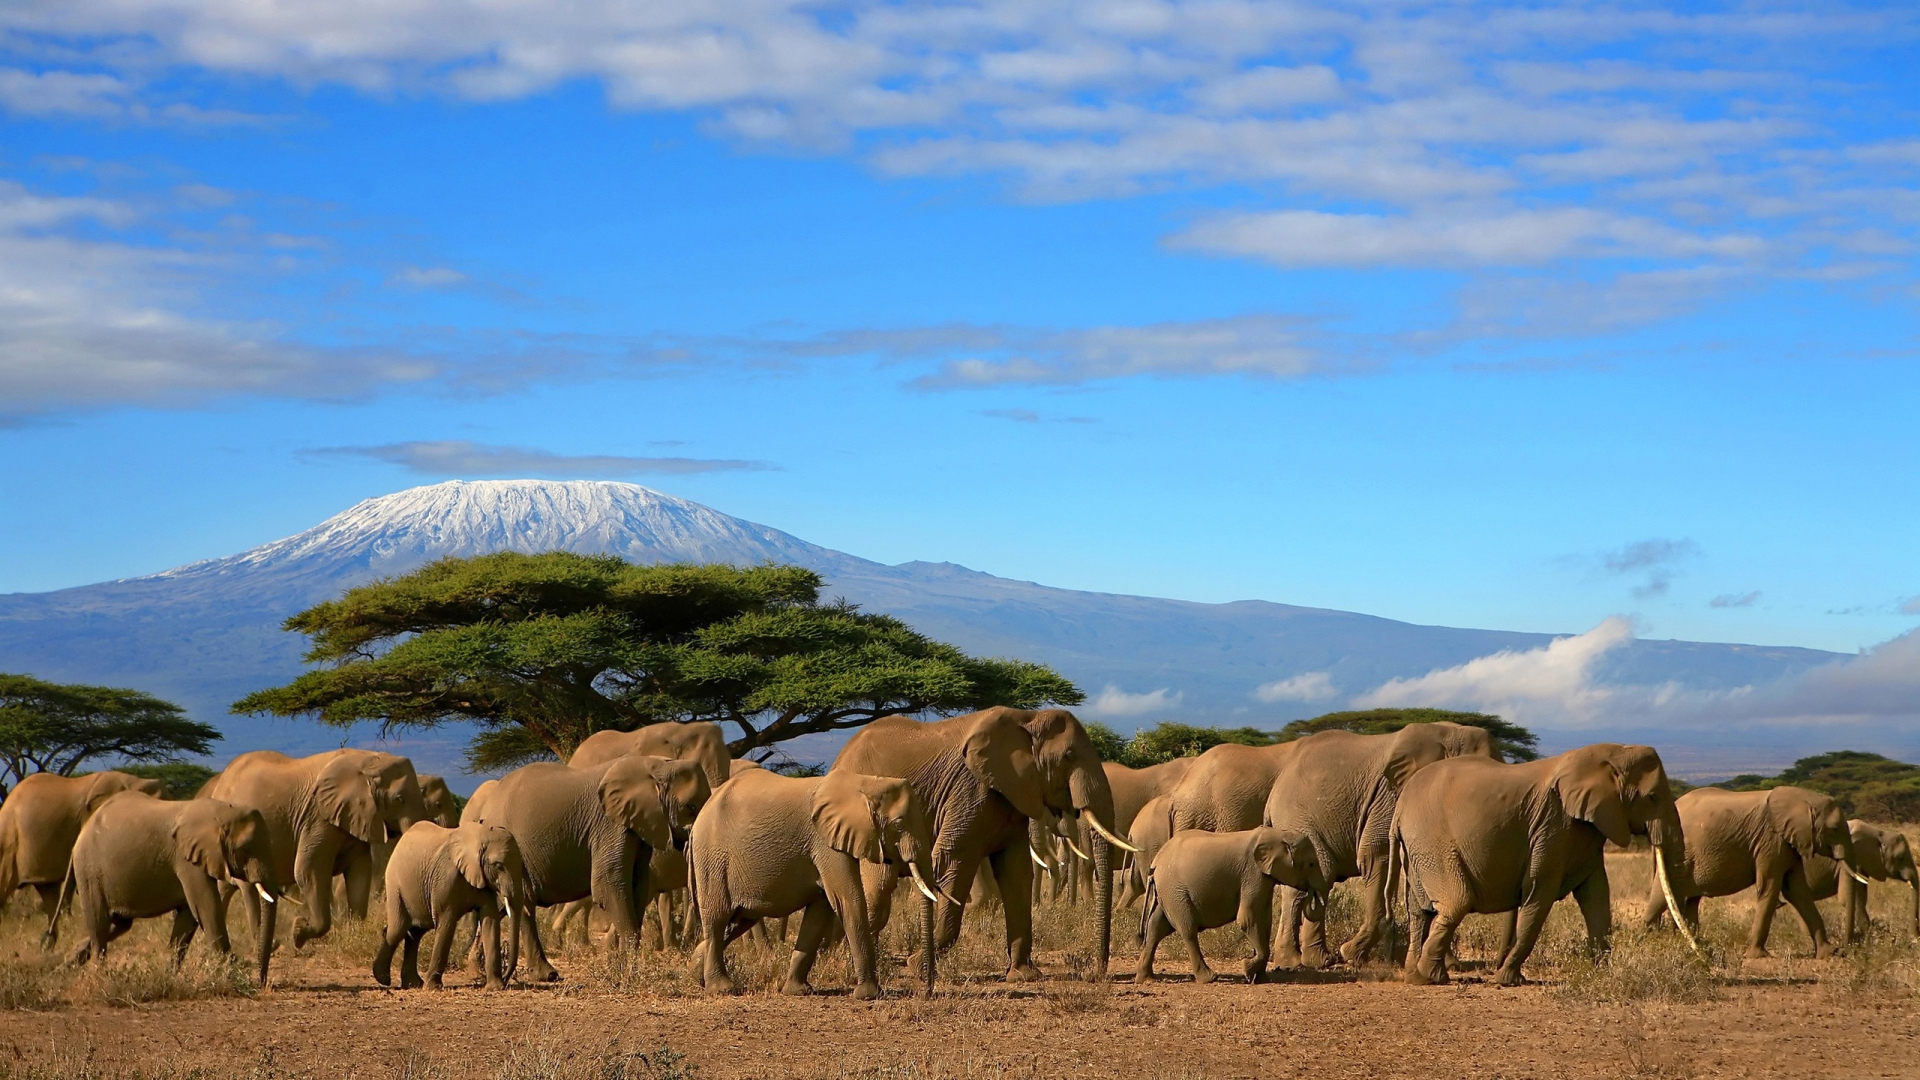 savannah, africa, african bush elephant, mountain, animal, mount kilamanjaro, tree, elephants